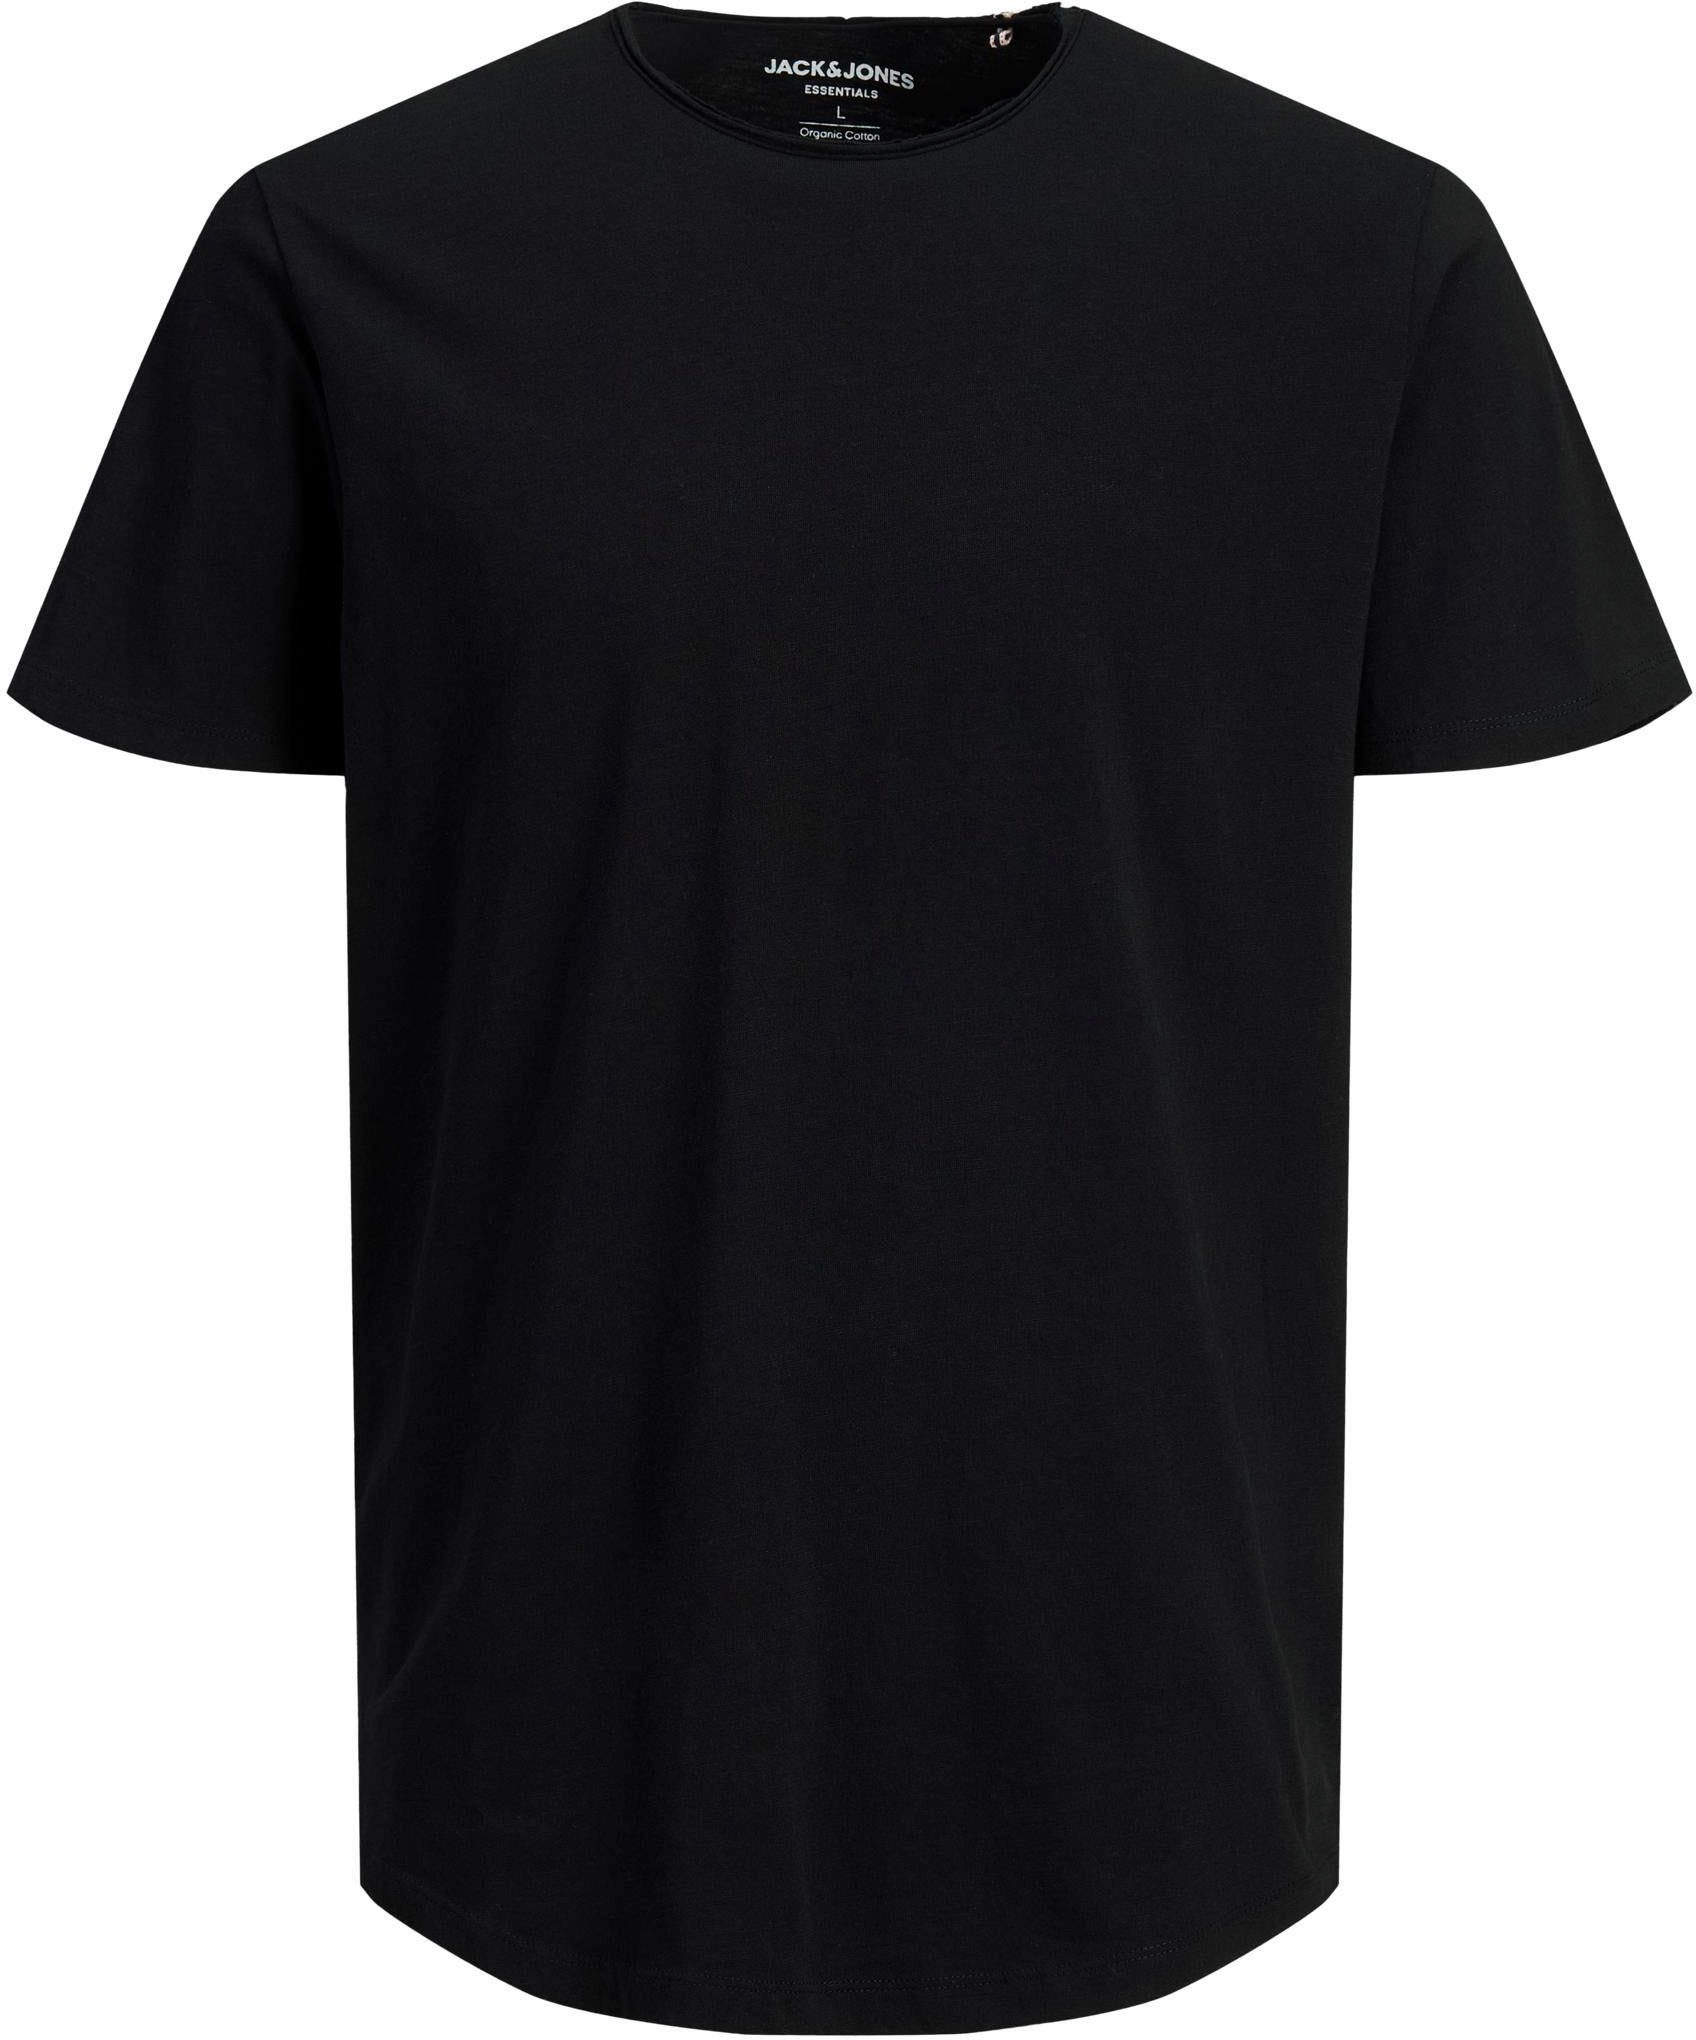 Black T-Shirt & Jones BASHER Jack TEE